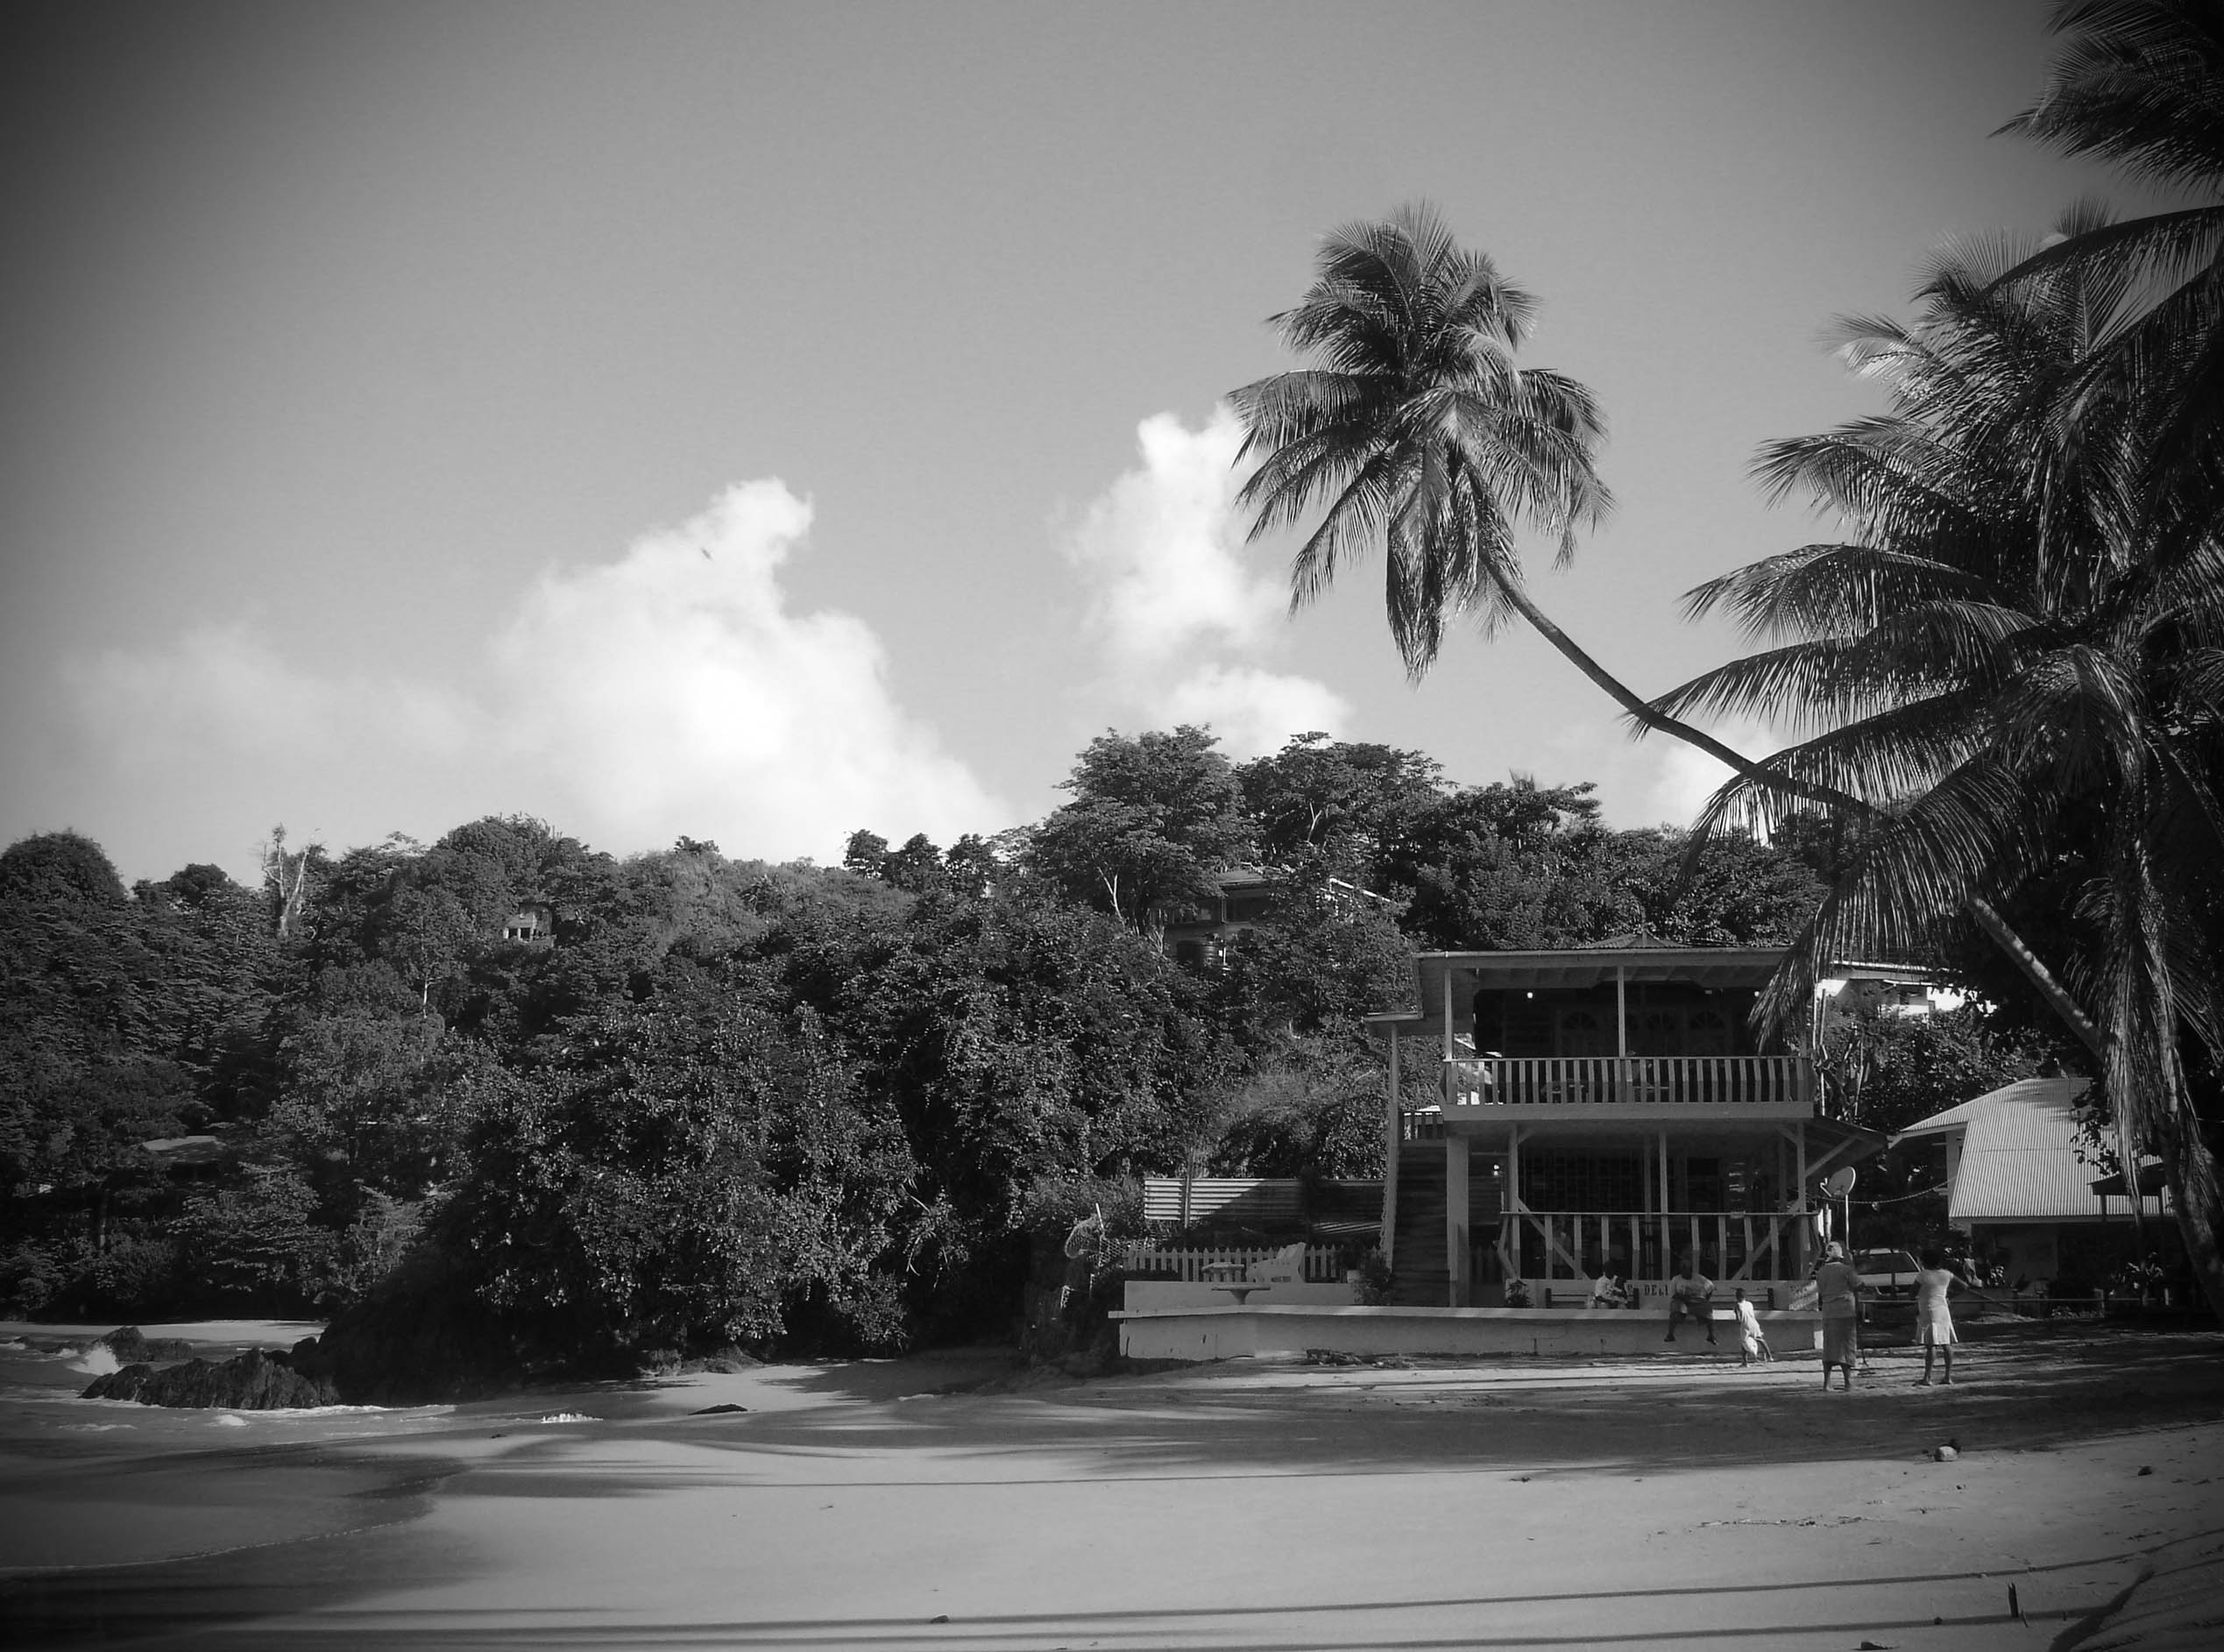 the naturalist resort on Castara Beach, Trinidad and Tobago